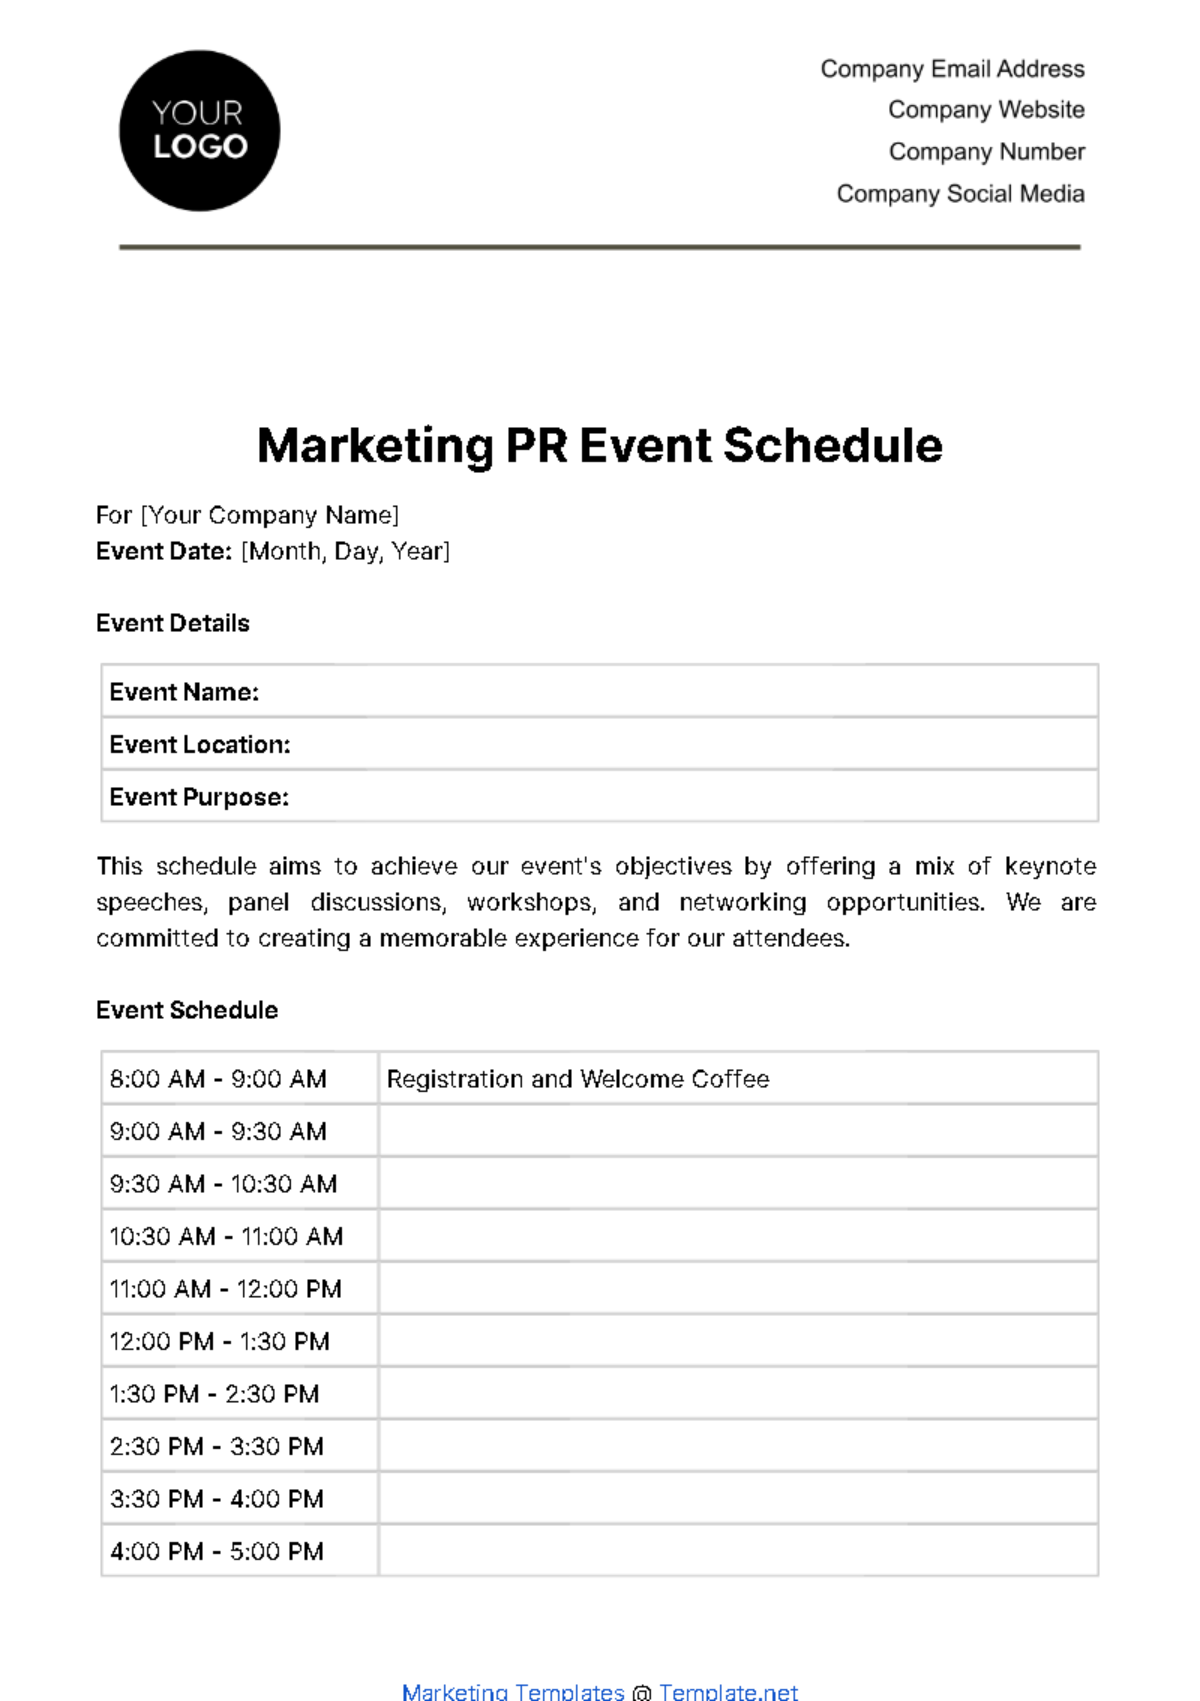 Free Marketing PR Event Schedule Template